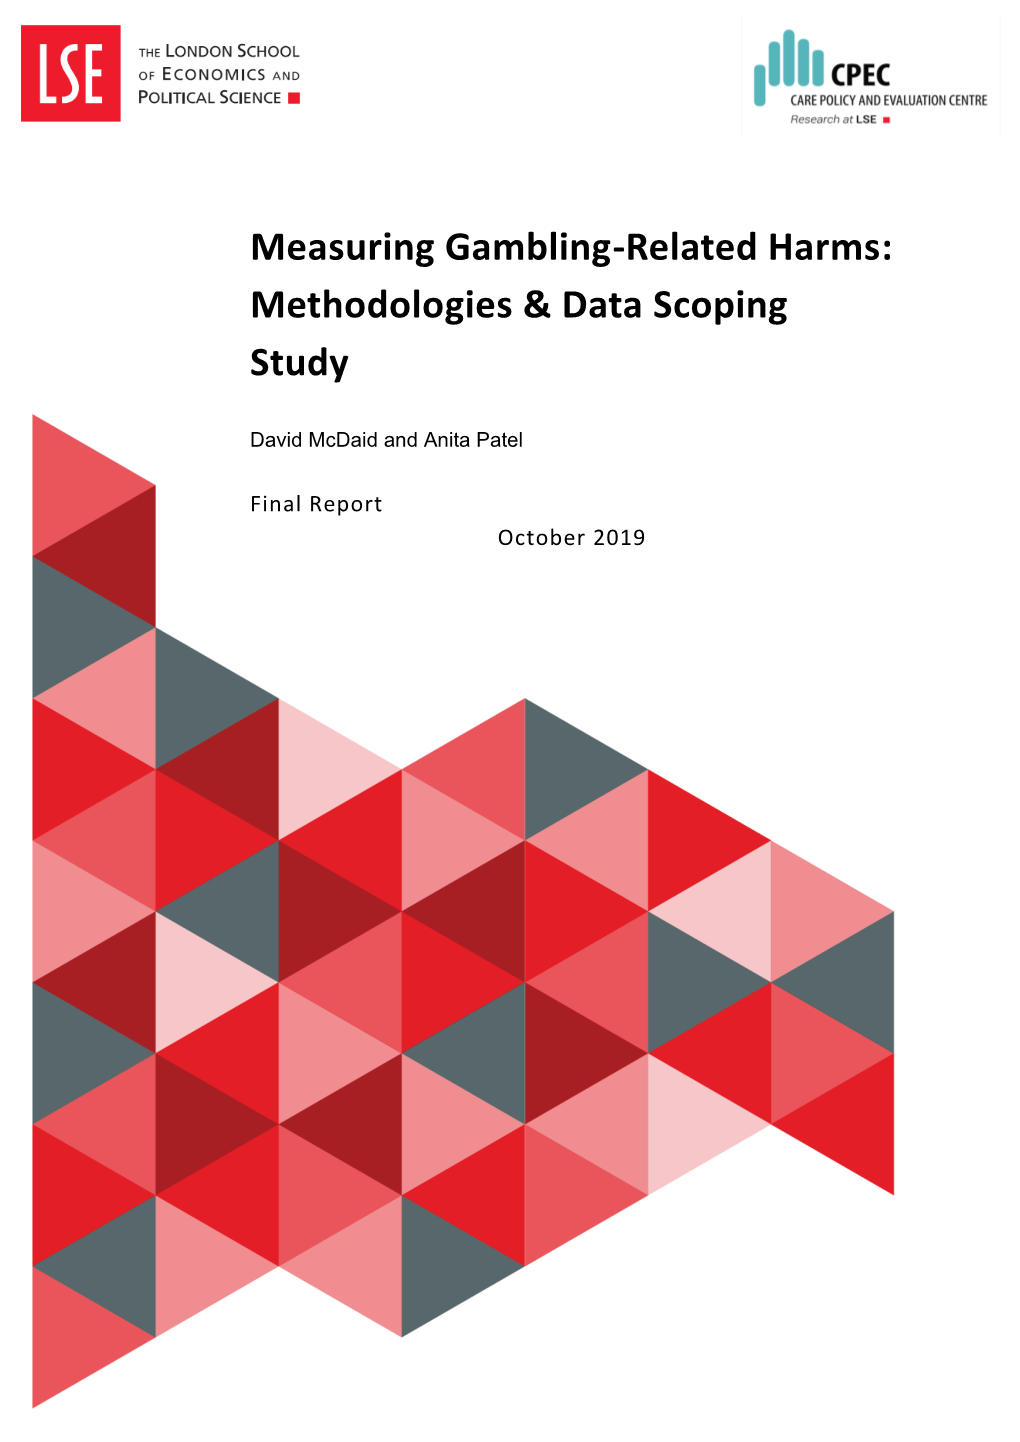 Measuring Gambling-Related Harms: Methodologies & Data Scoping Study